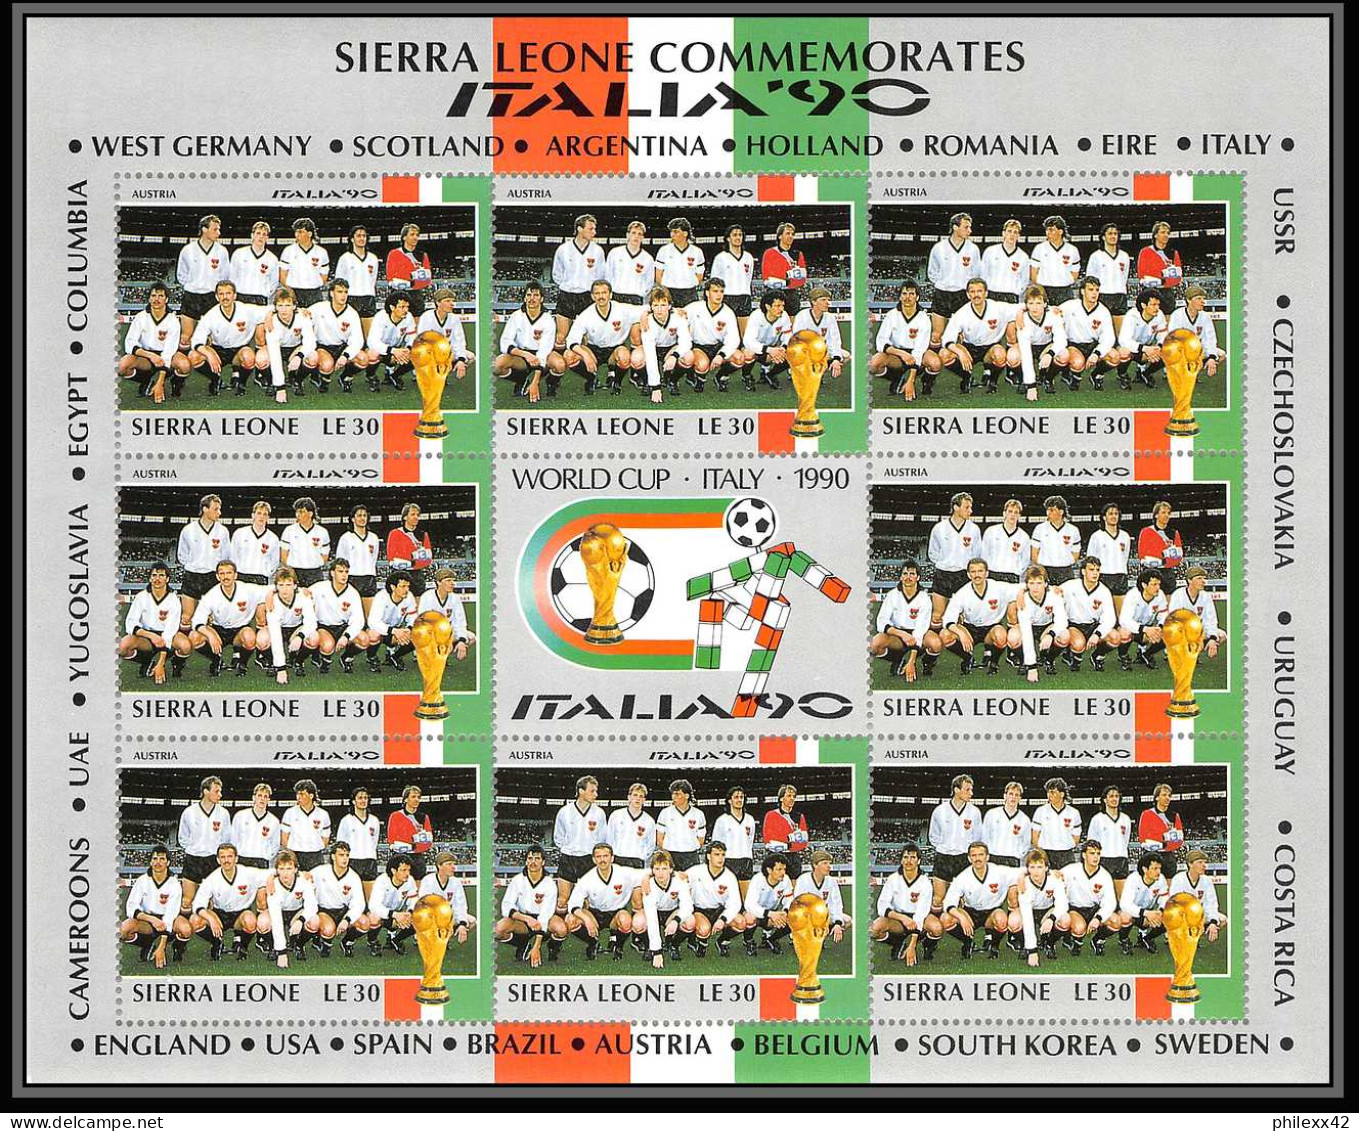 042 Football (Soccer) italia 90 neuf ** MNH - Sierra Leone 24 blocs